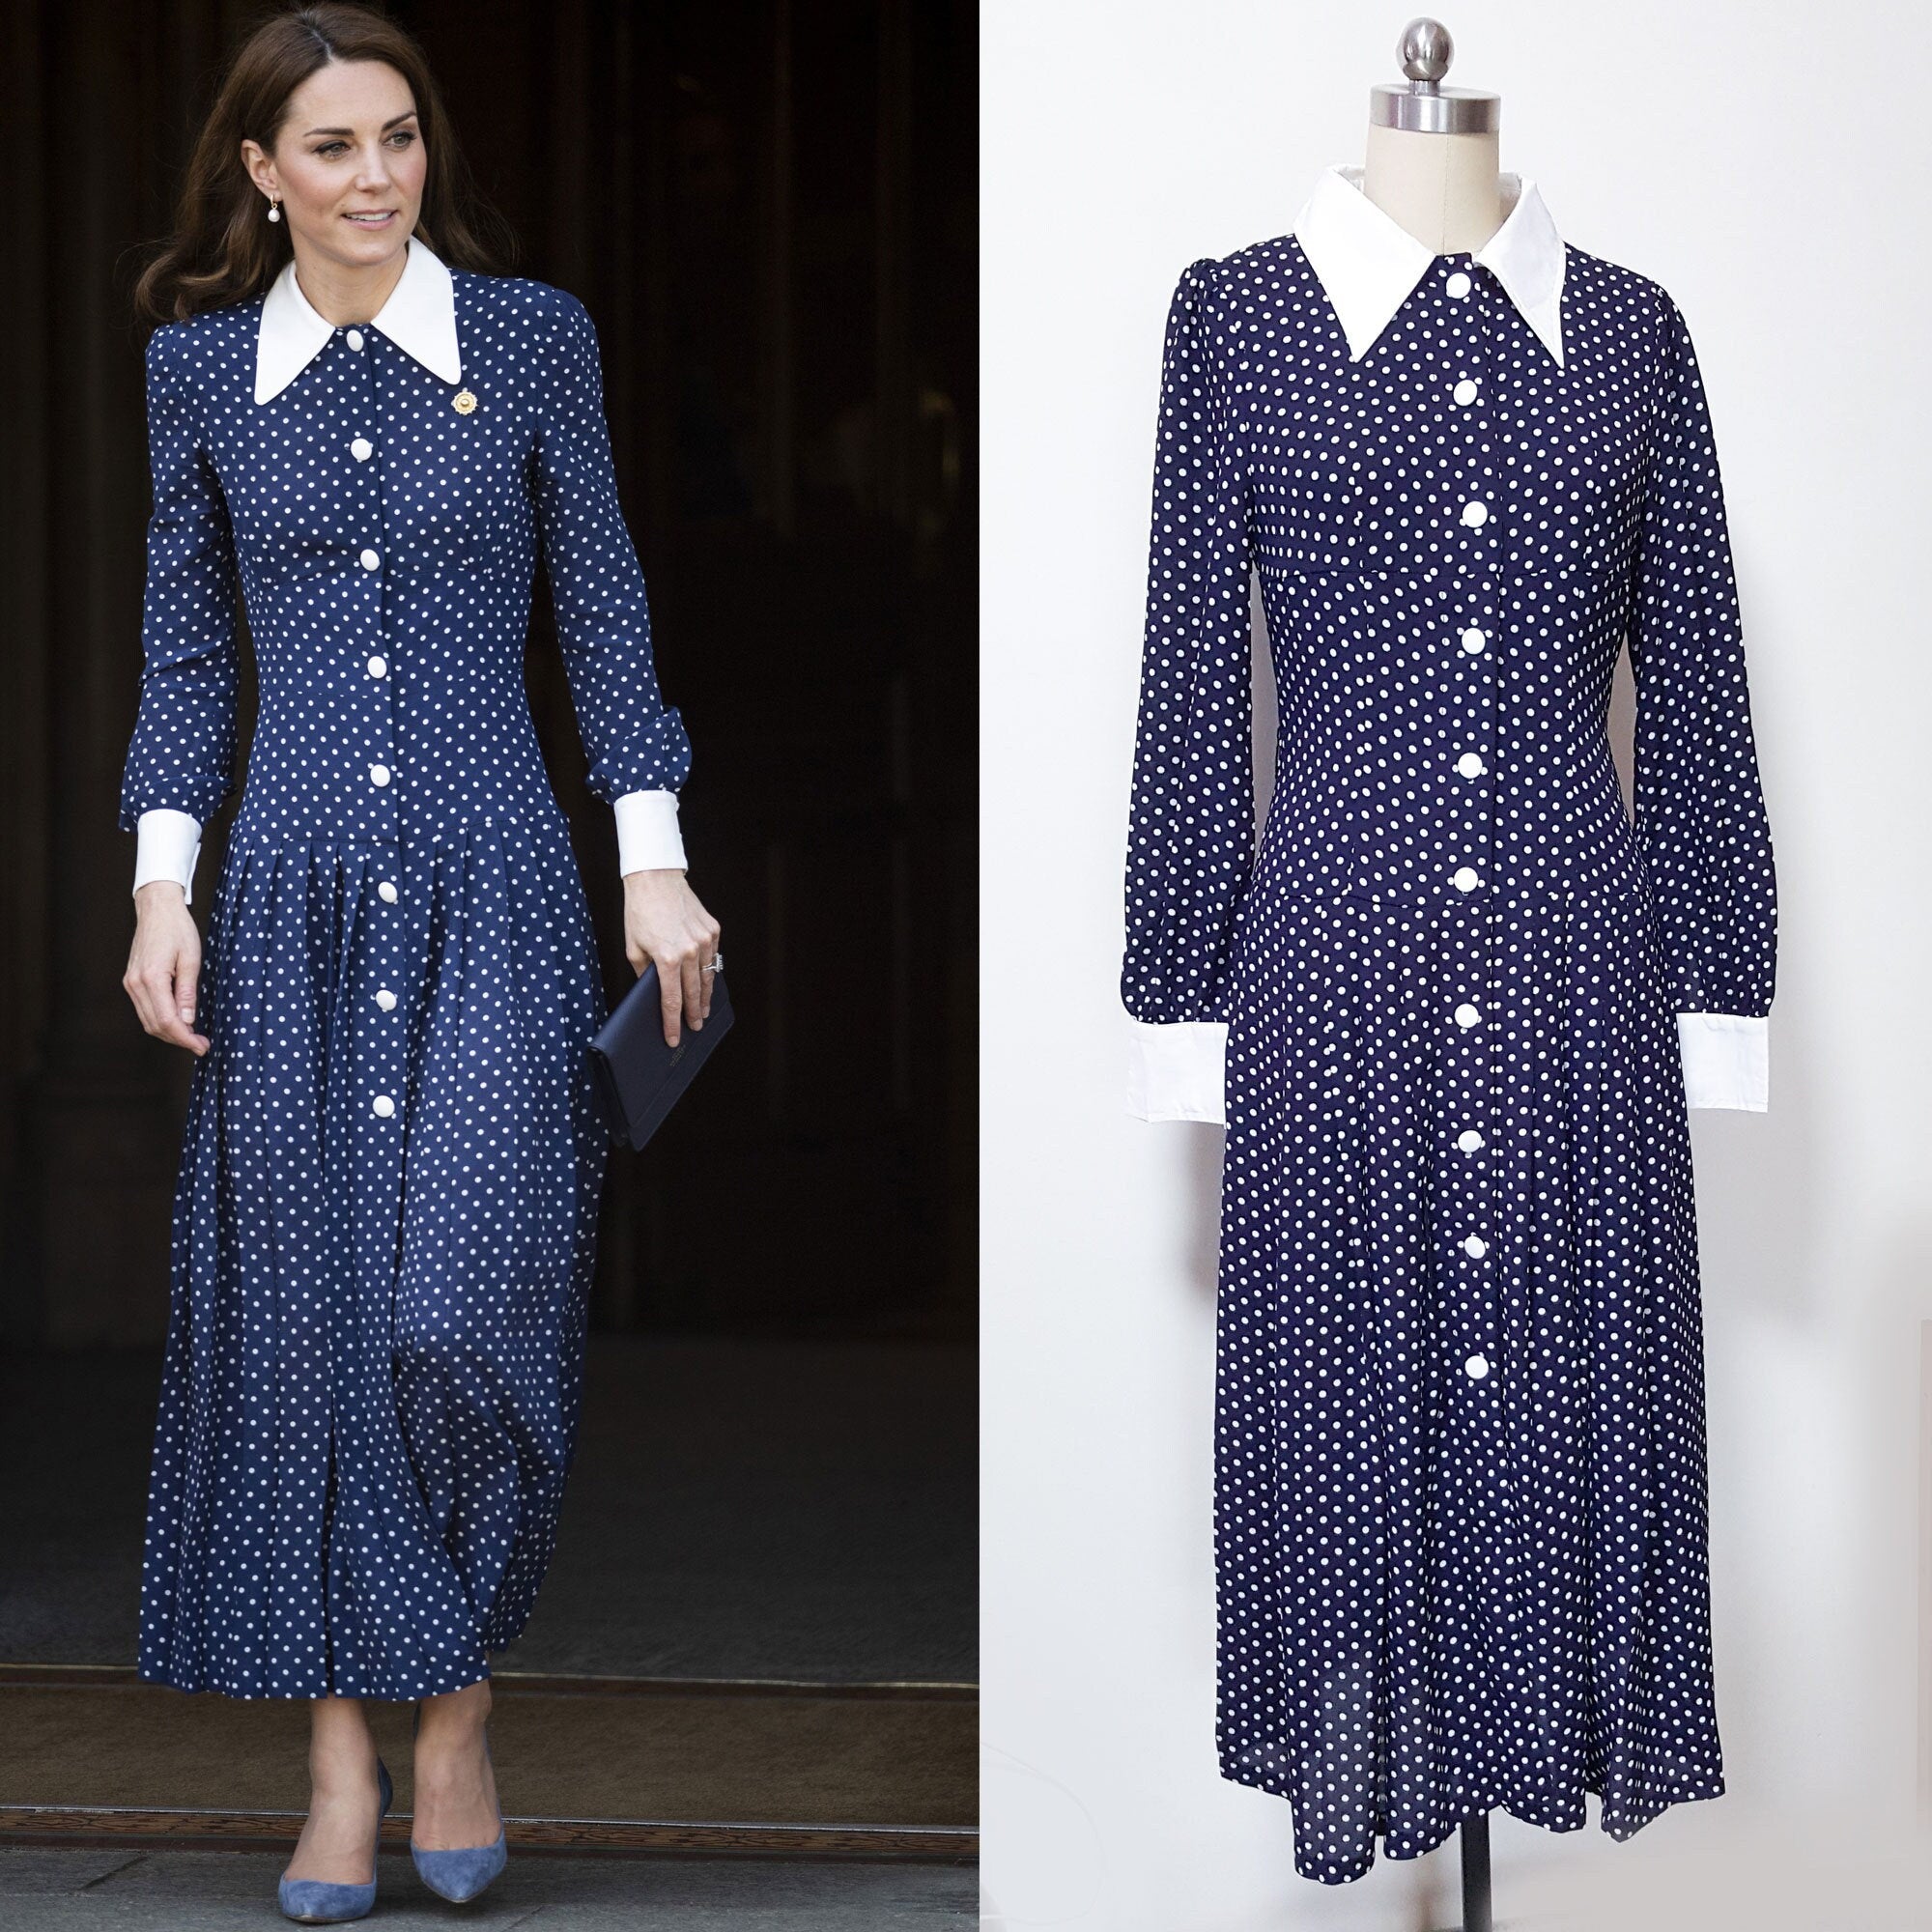 Duchess Kate Middleton's navy polka dot dress was inspired by